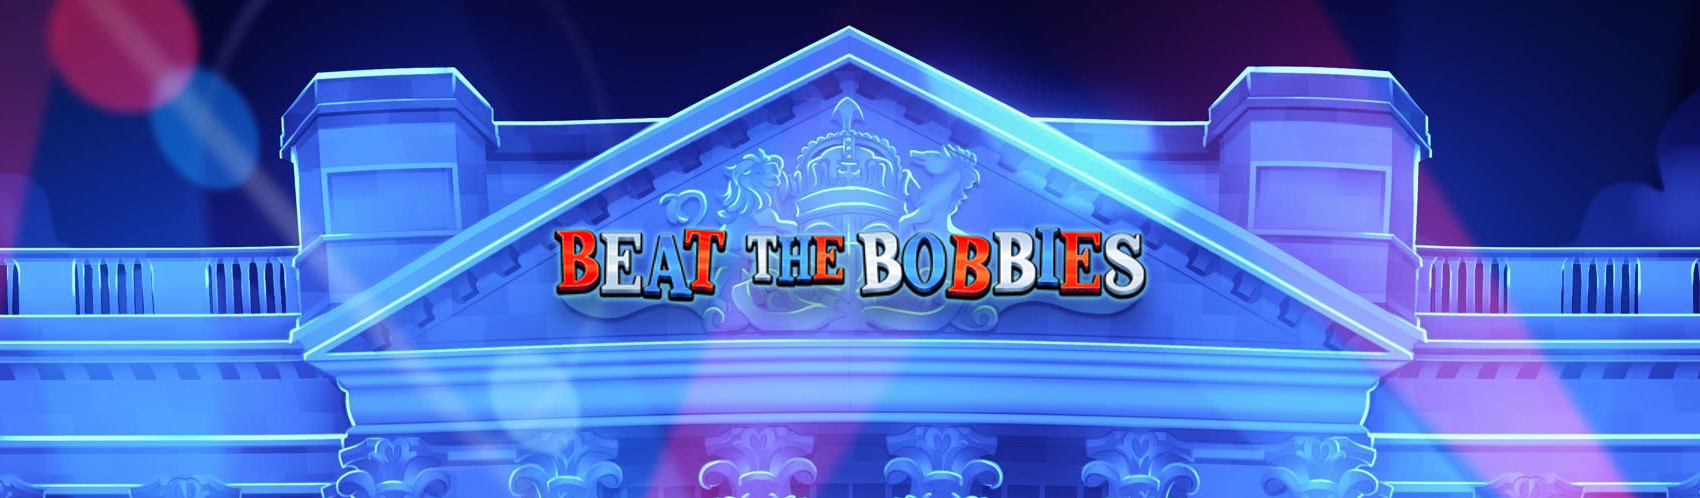 Beat the Bobbies Slot Review - SlotsUK